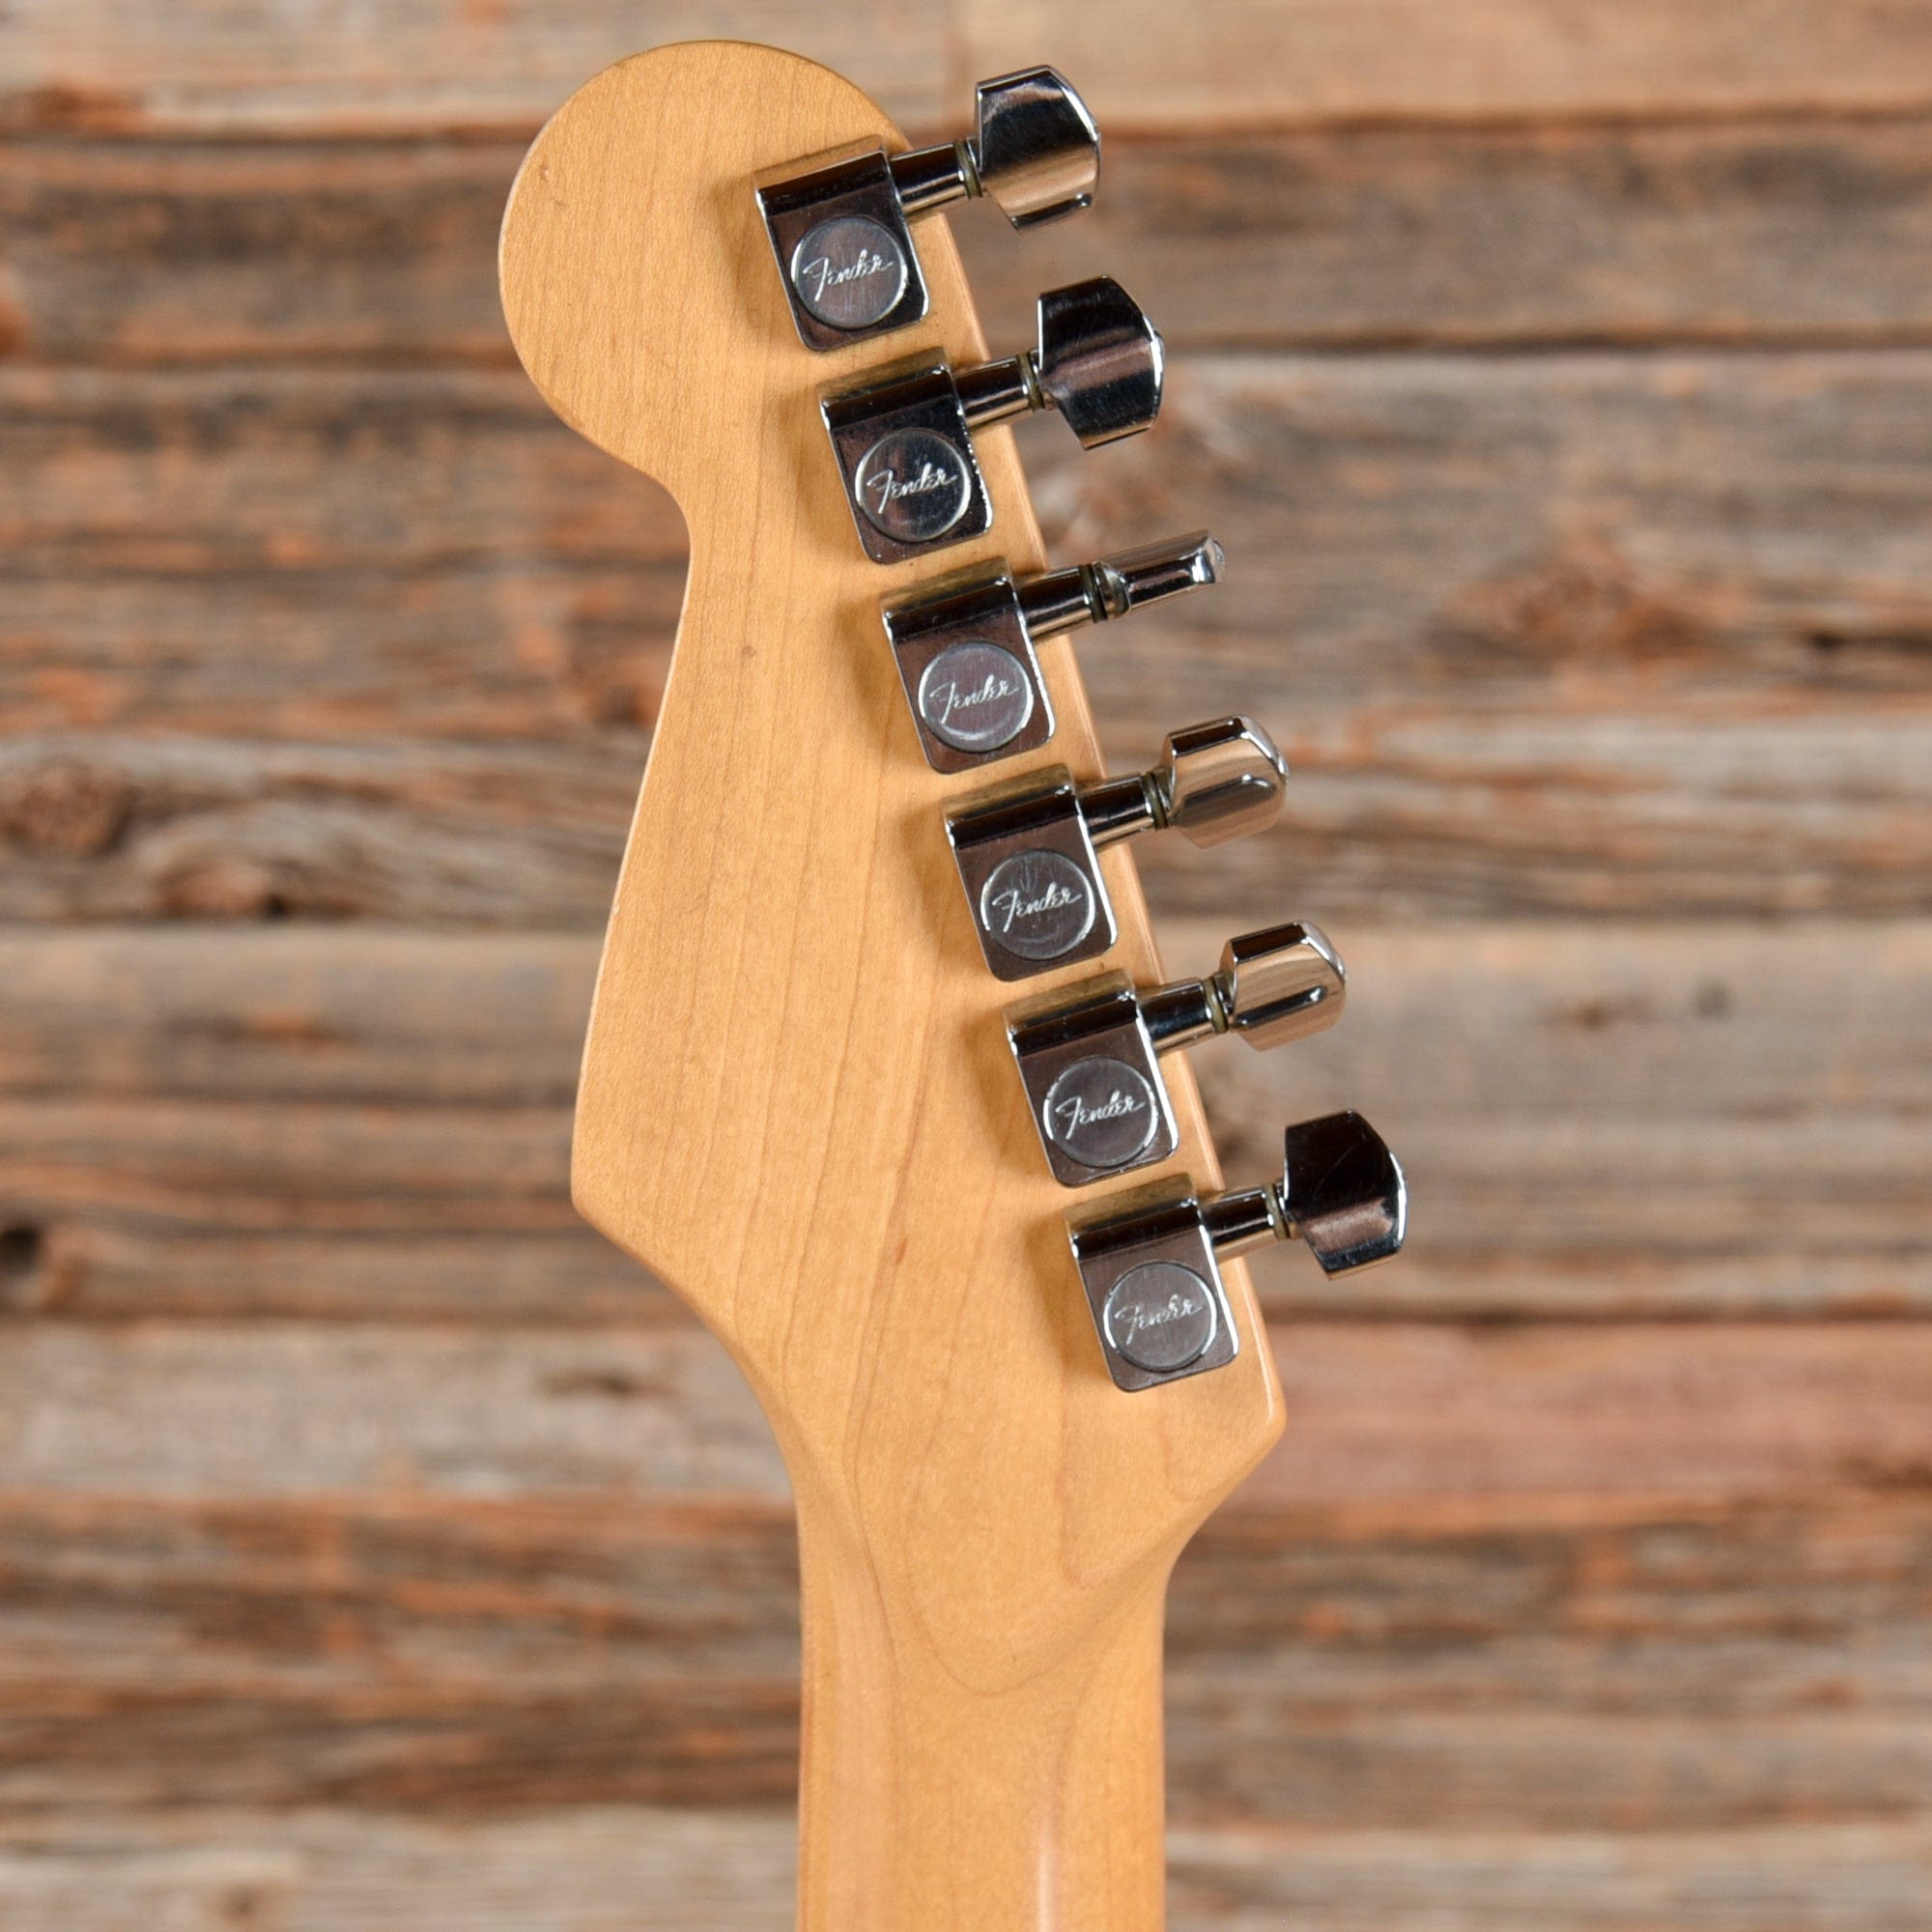 Fender American Standard Stratocaster Gunmetal Blue 1988 Electric Guitars / Solid Body